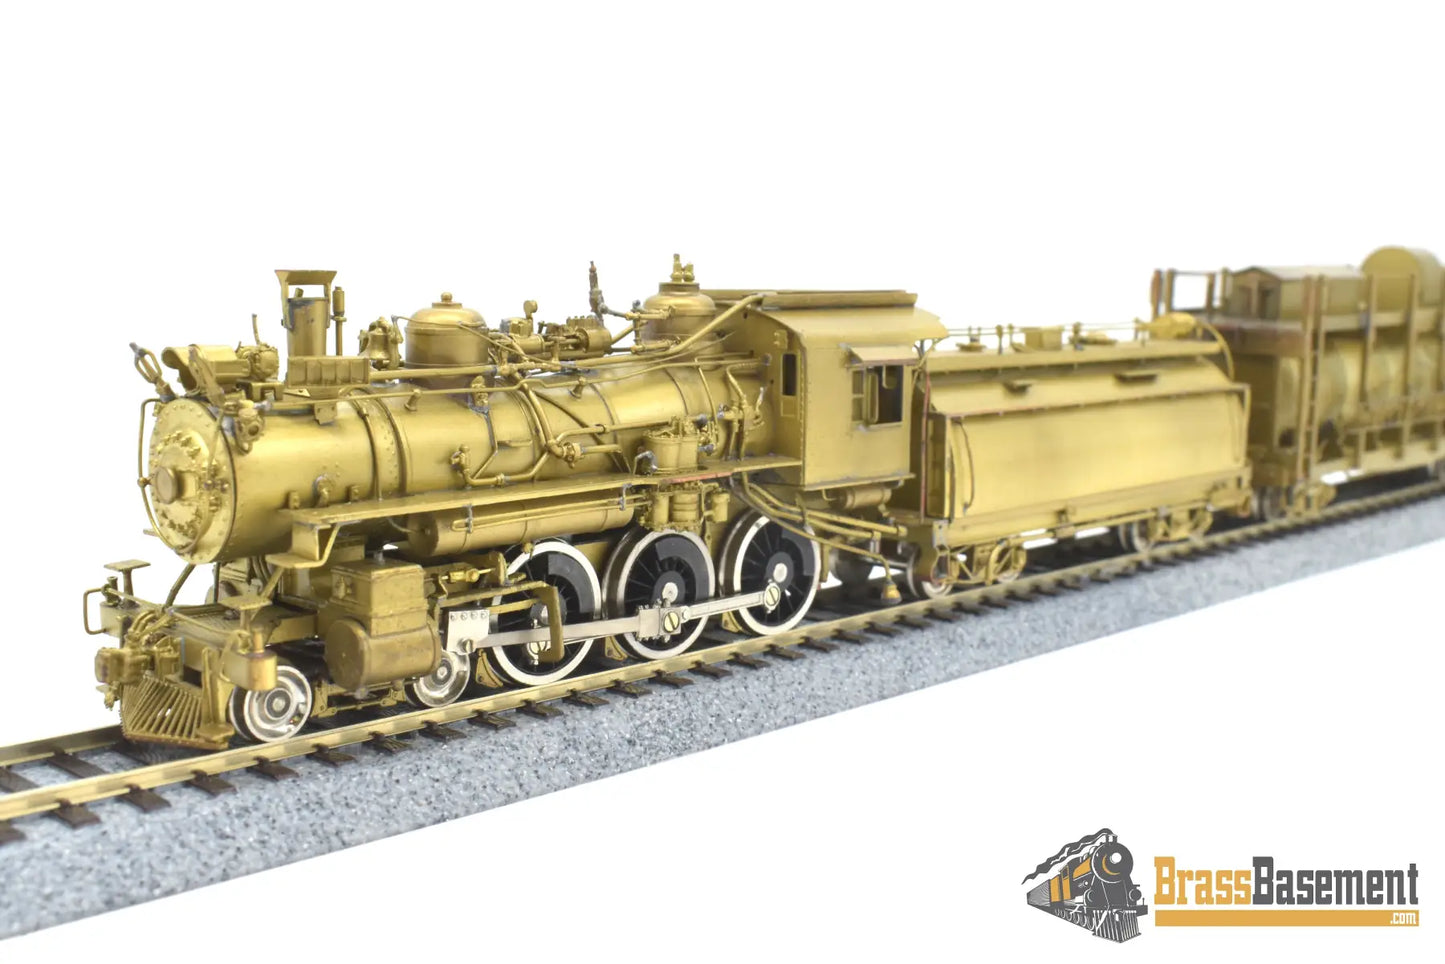 Ho Brass - Westside Southern Pacific Fire Train 4 - 6 - 0 #2248 Unpainted Steam